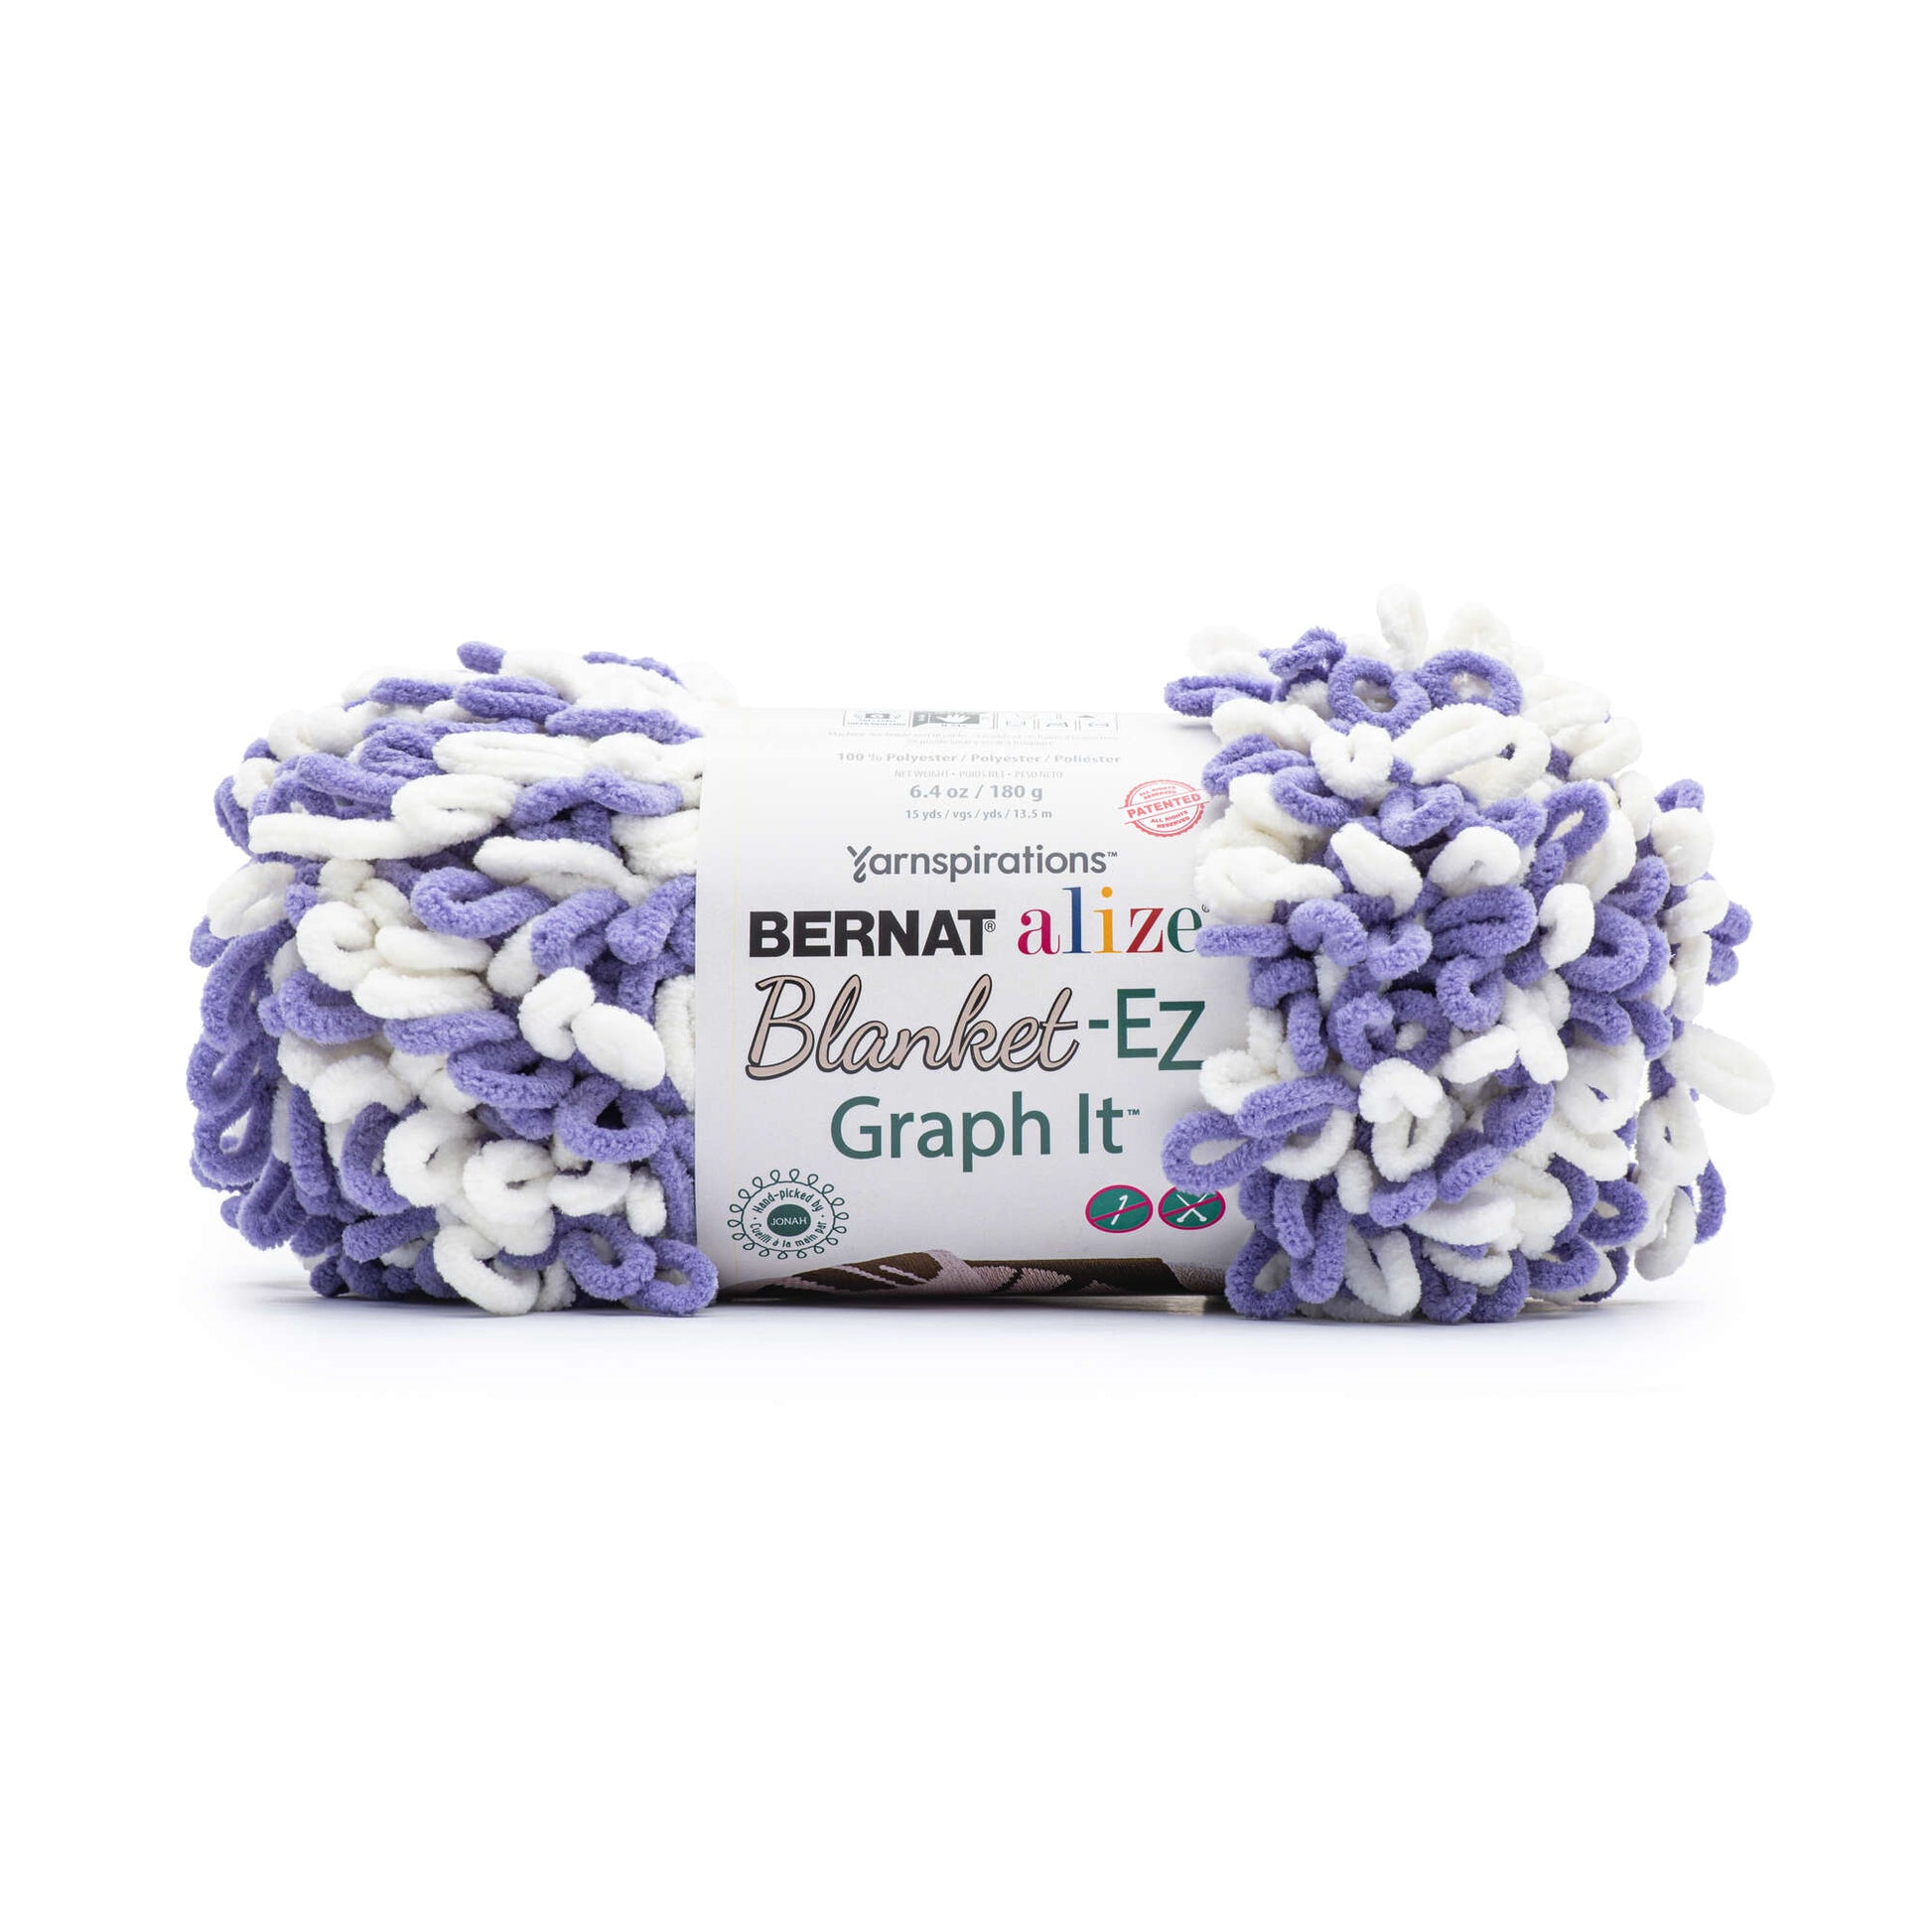 Bernat Alize Blanket-EZ Graph It Yarn - Discontinued Shades Violet Cream